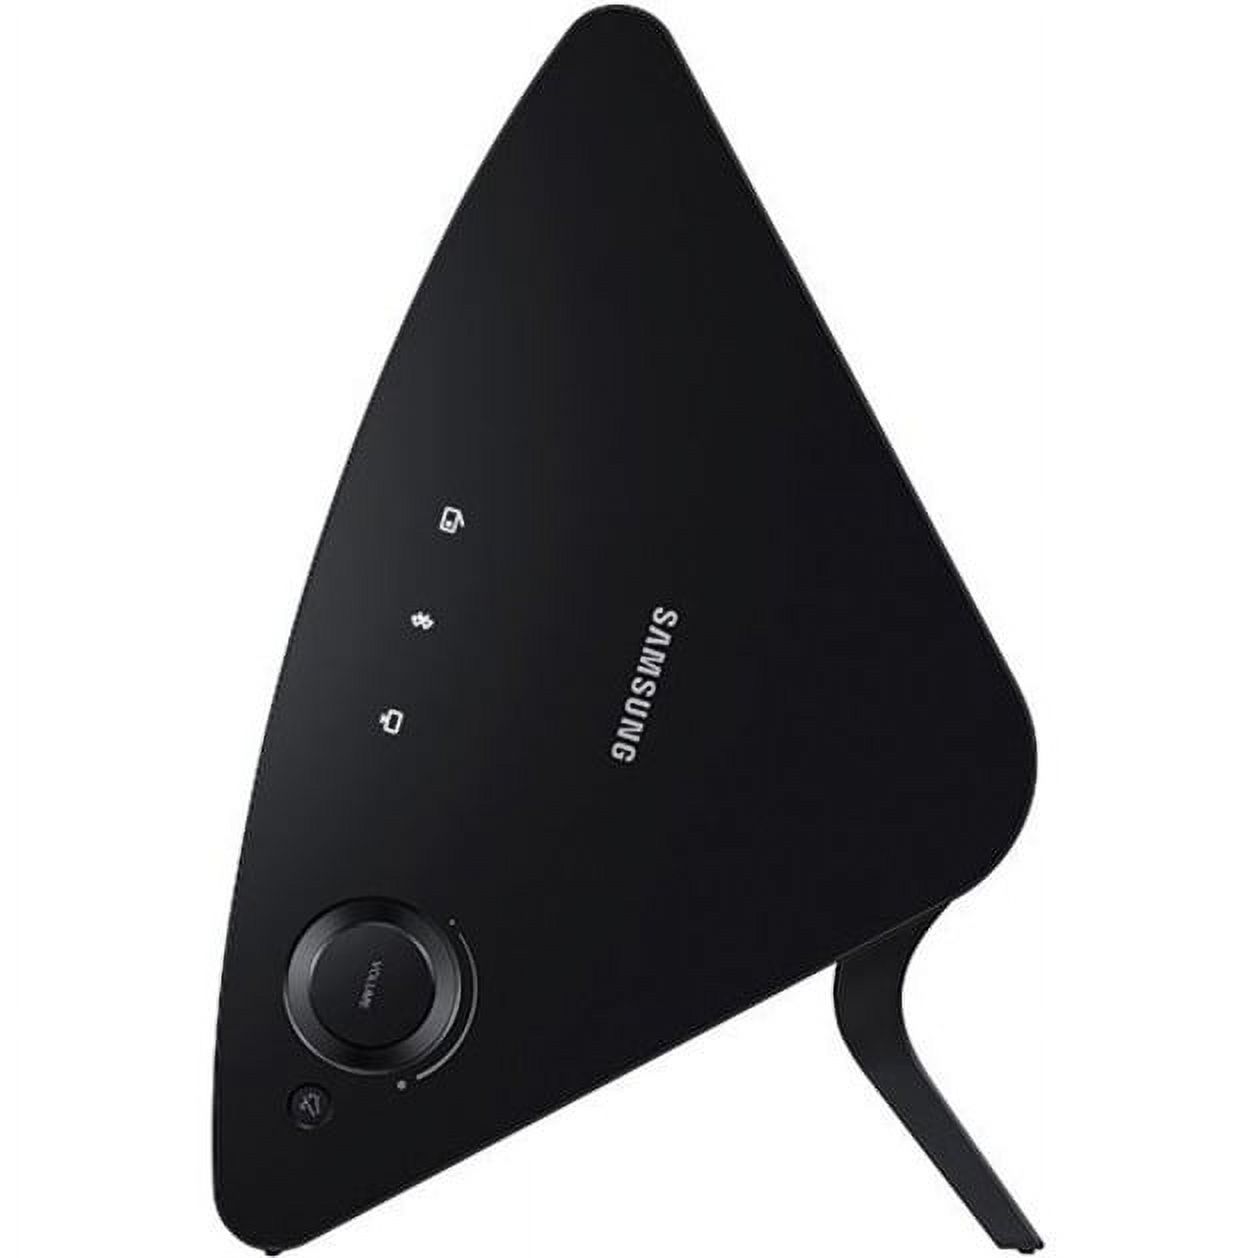 Samsung Shape M3 1.0 Bluetooth Speaker System, Black - image 6 of 6